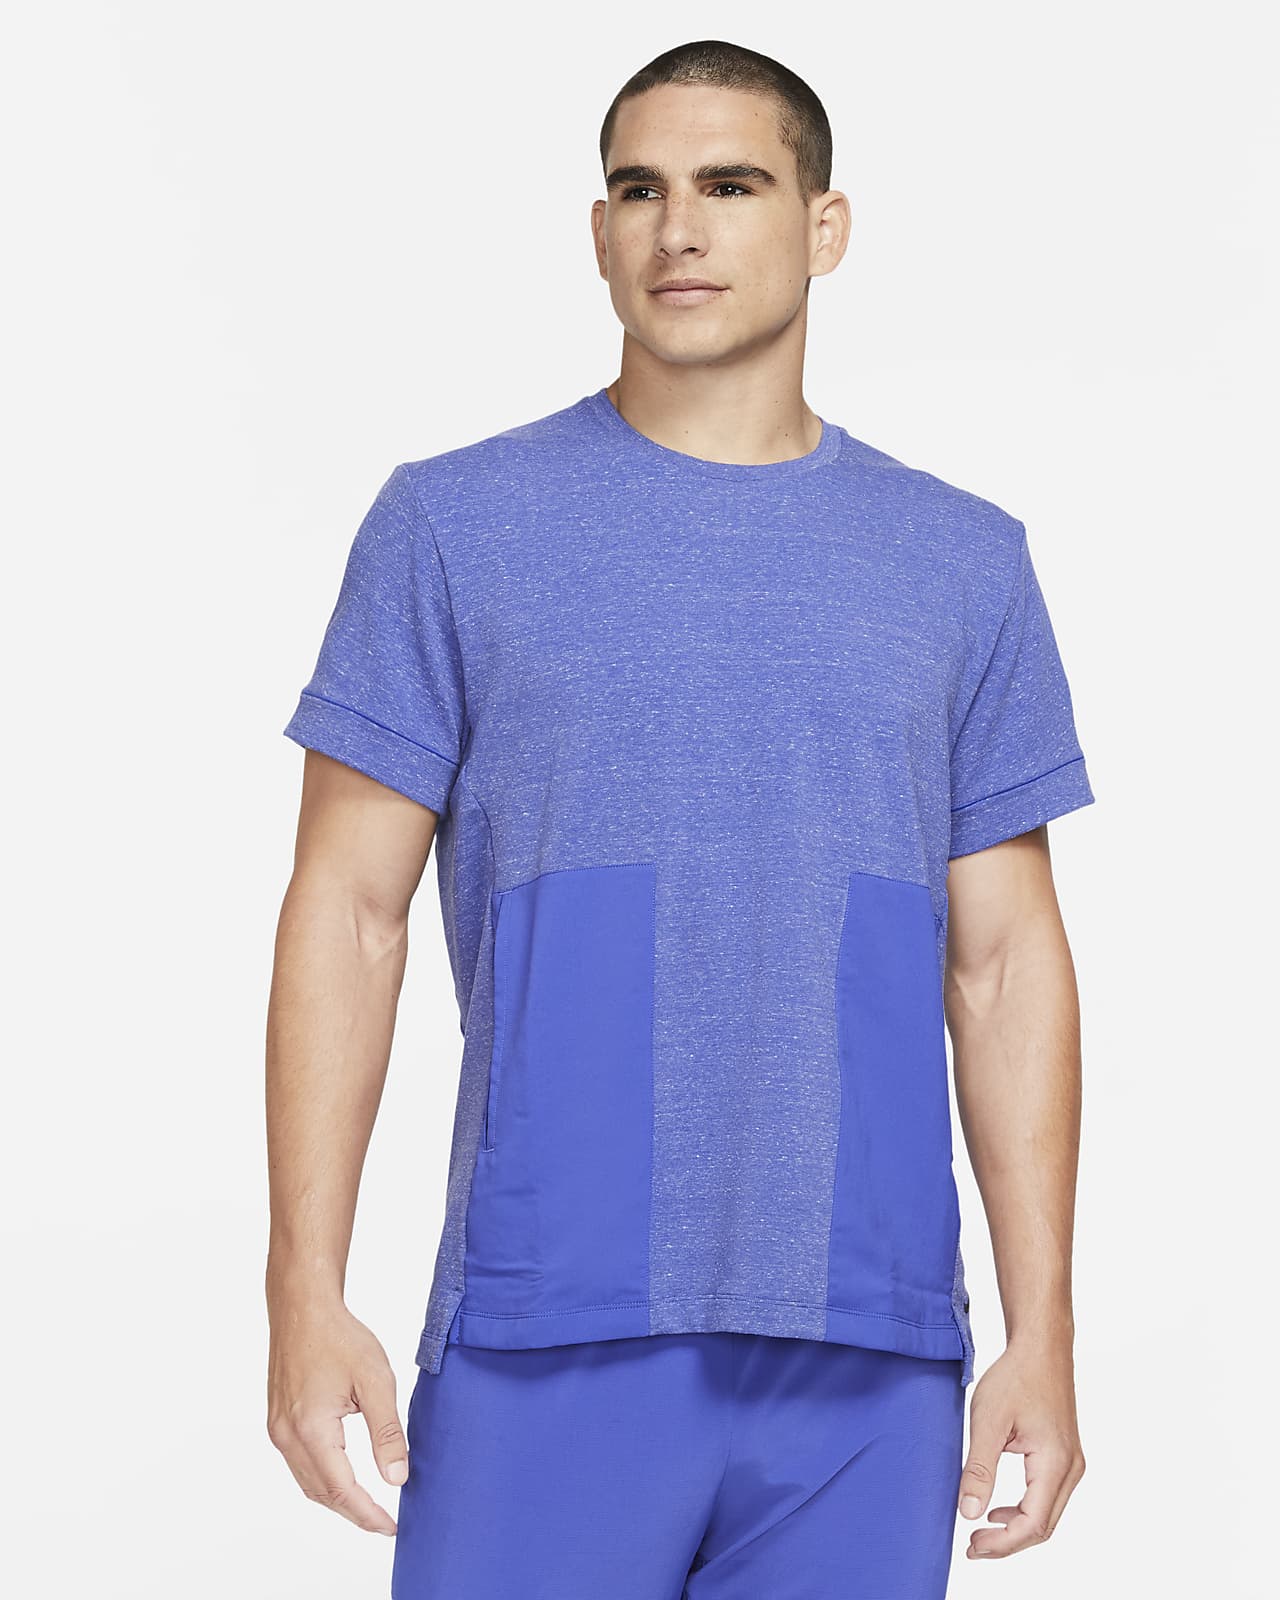 Nike Yoga Dri-FIT Men's Short-Sleeve Top